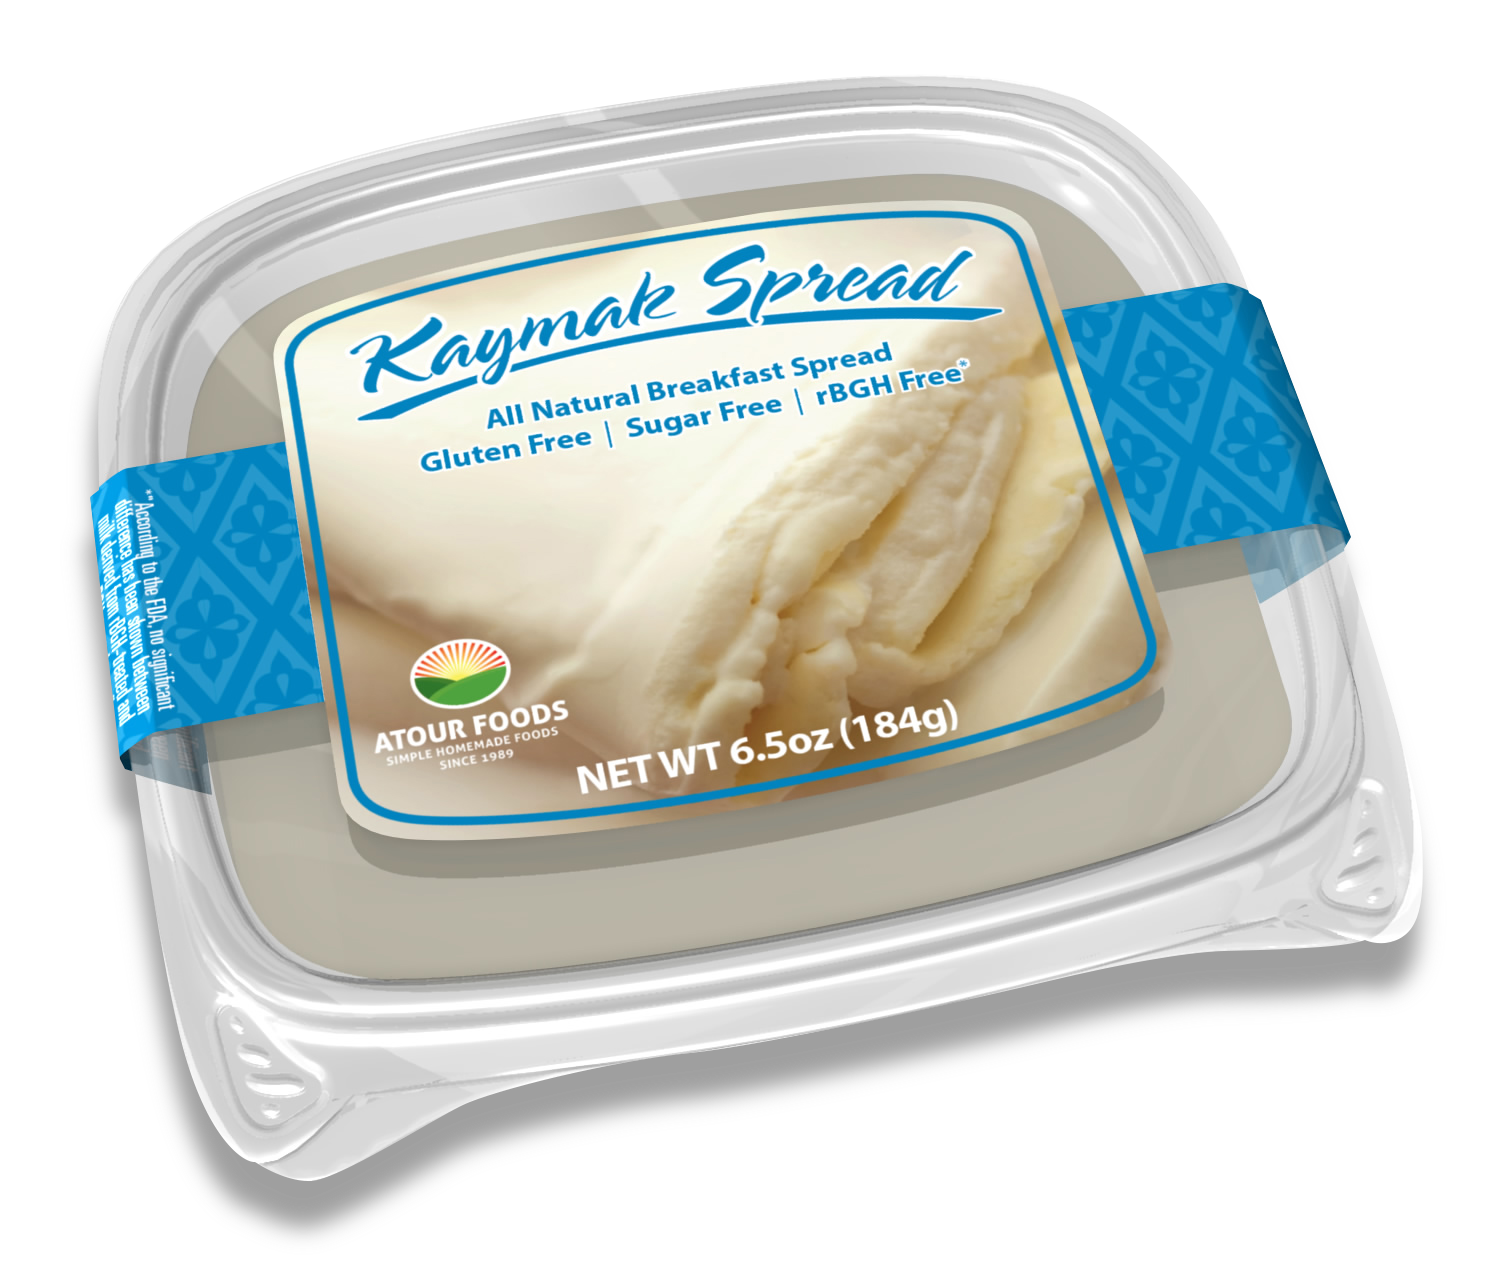 Cream spread product